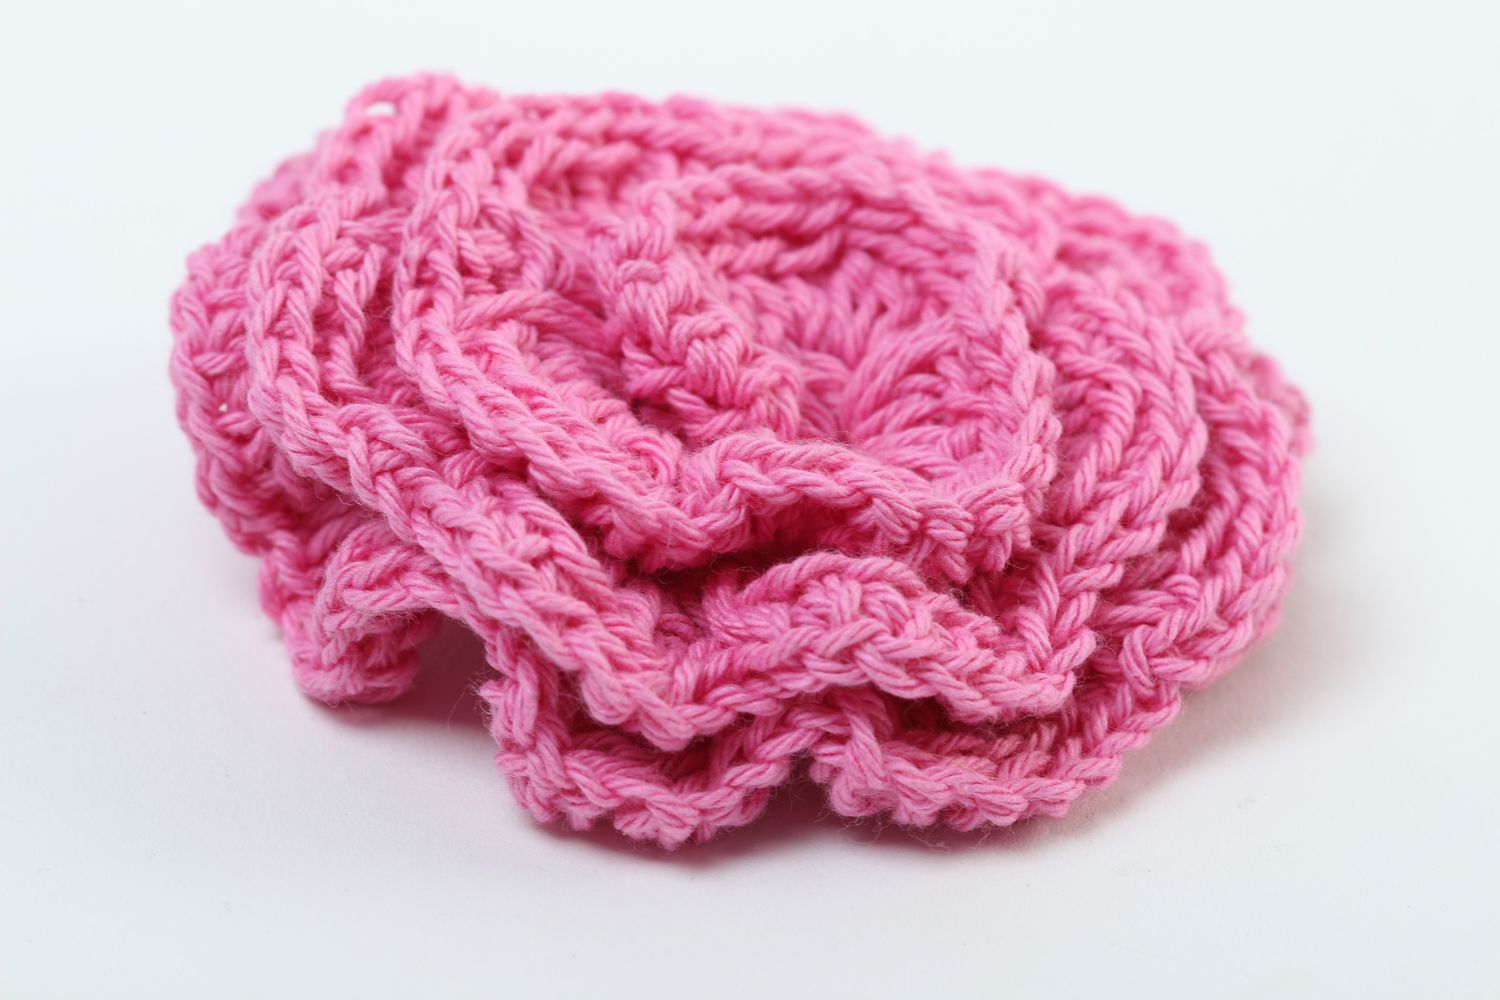 Handmade crocheted flower hair accessories craft supplies jewelry supplies
 photo 3